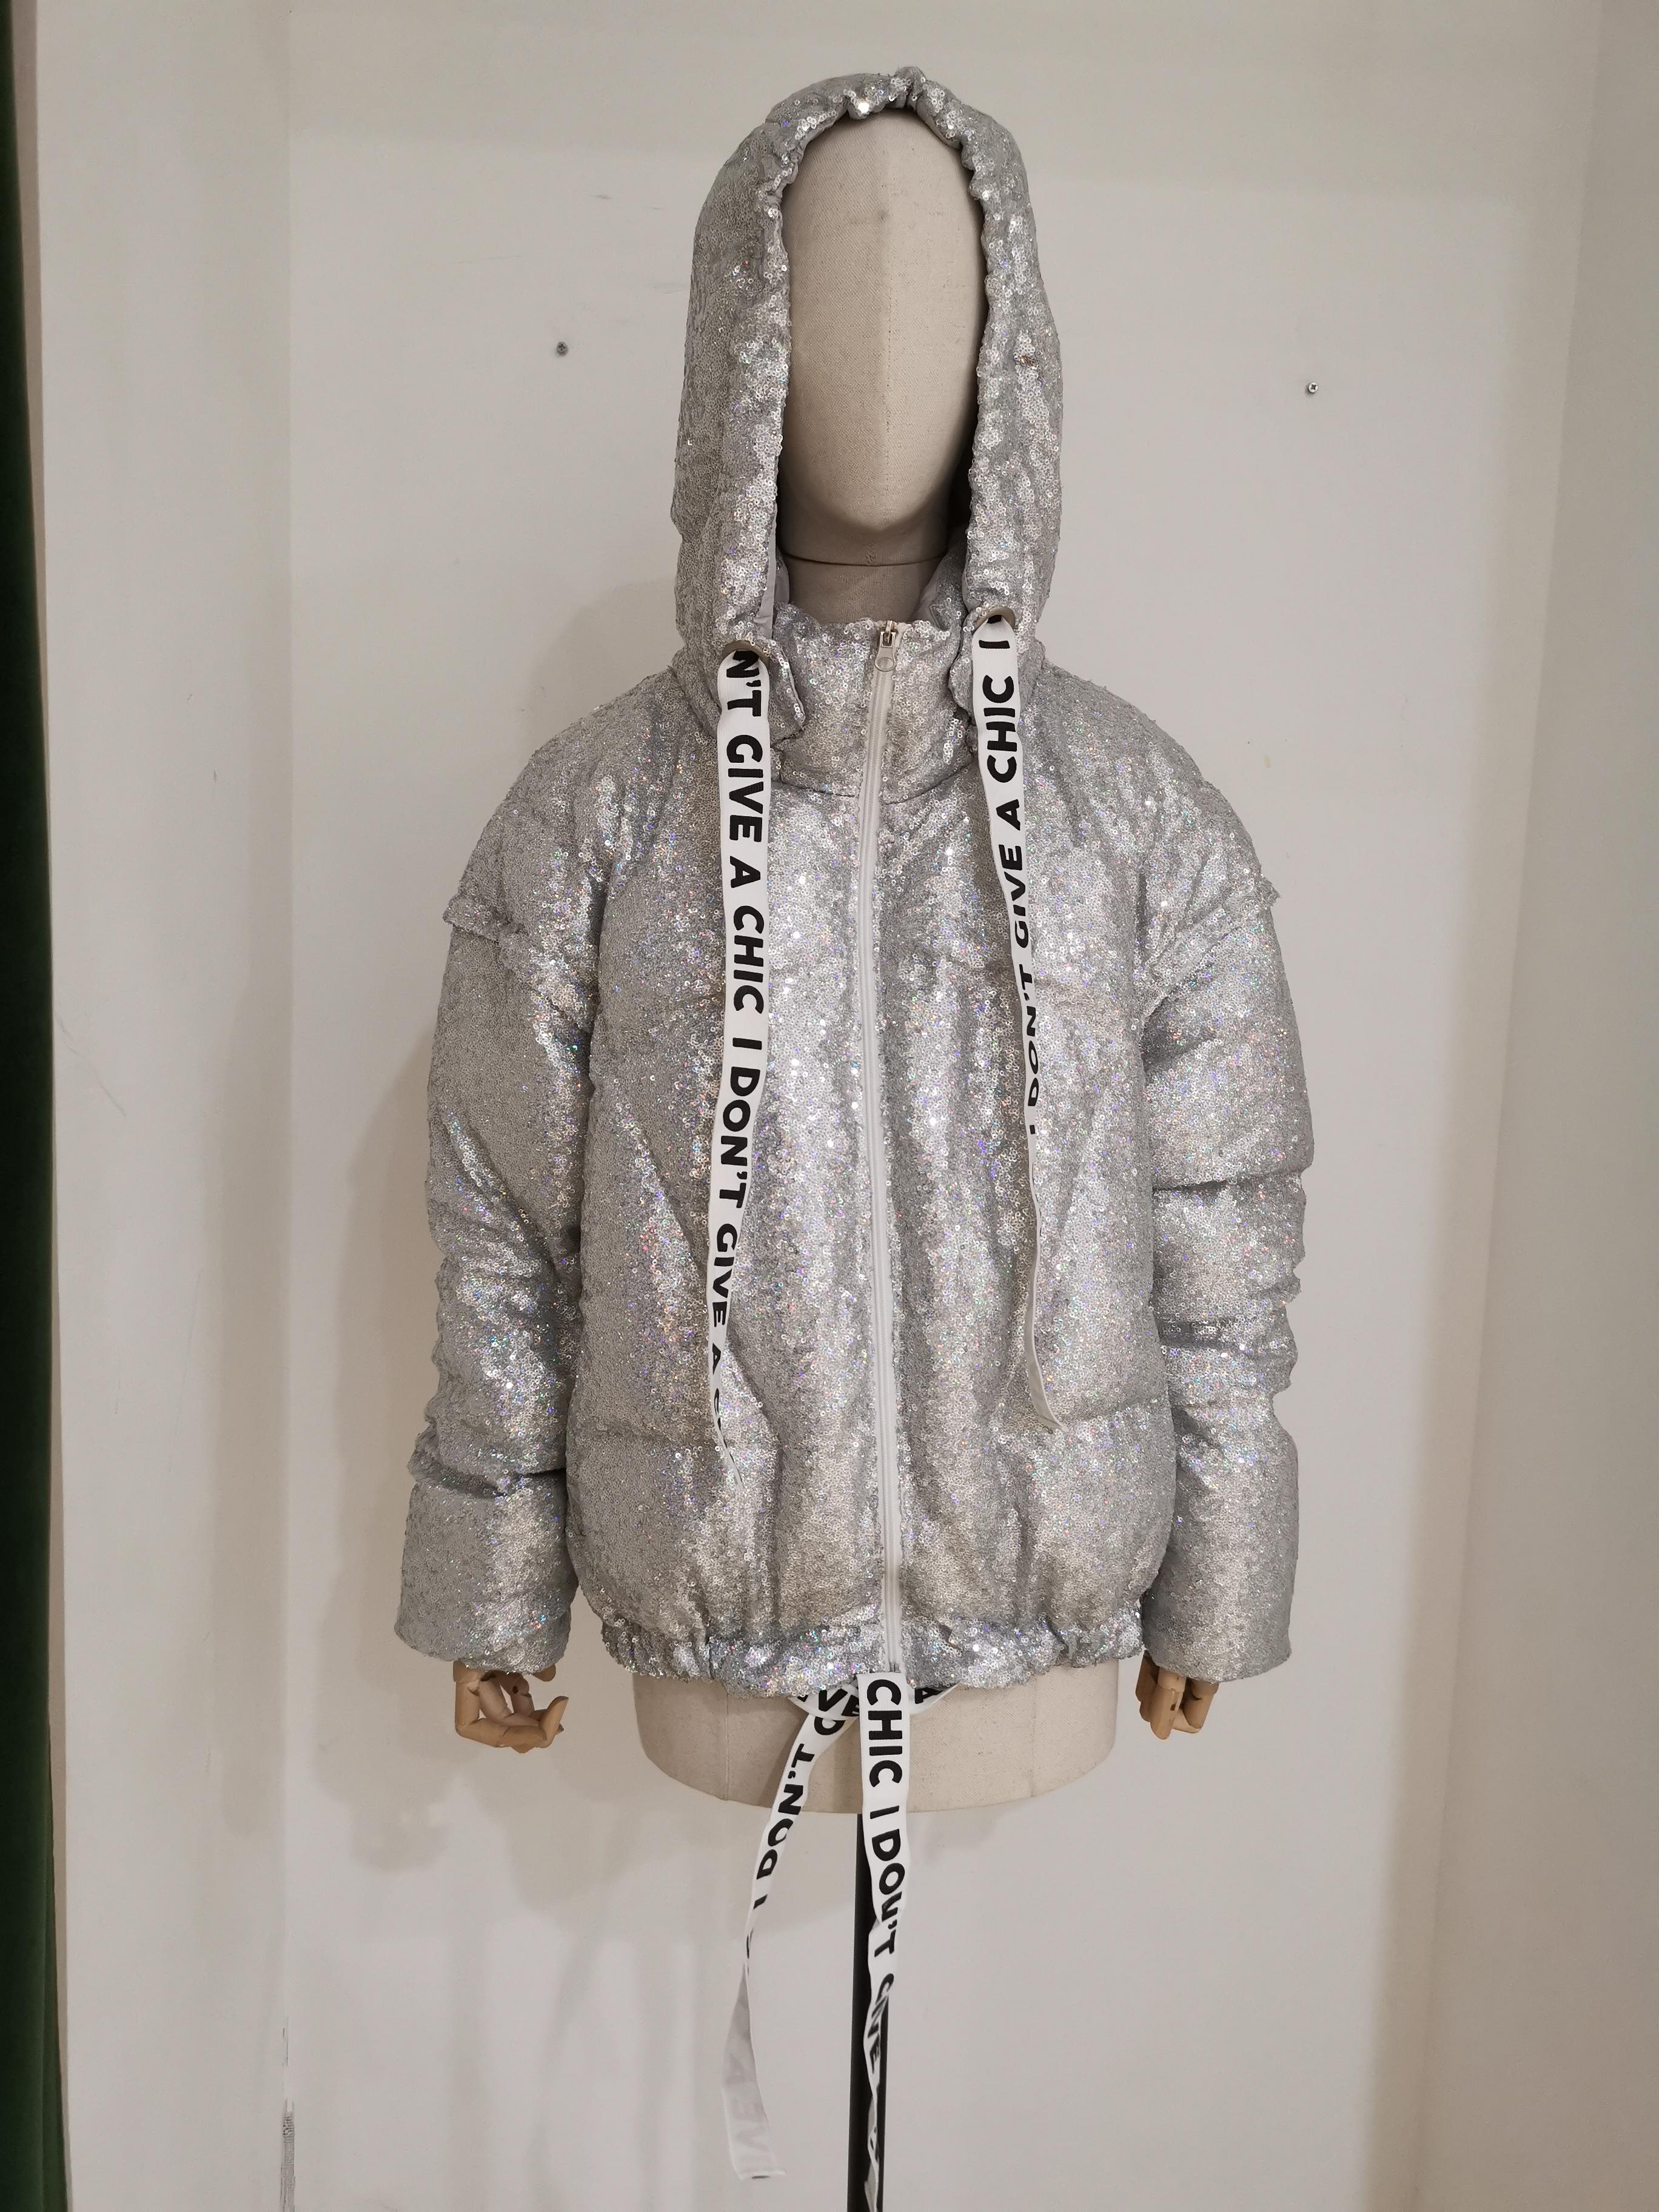 House of MuaMua silver sequins duvet bomber jacket
size M